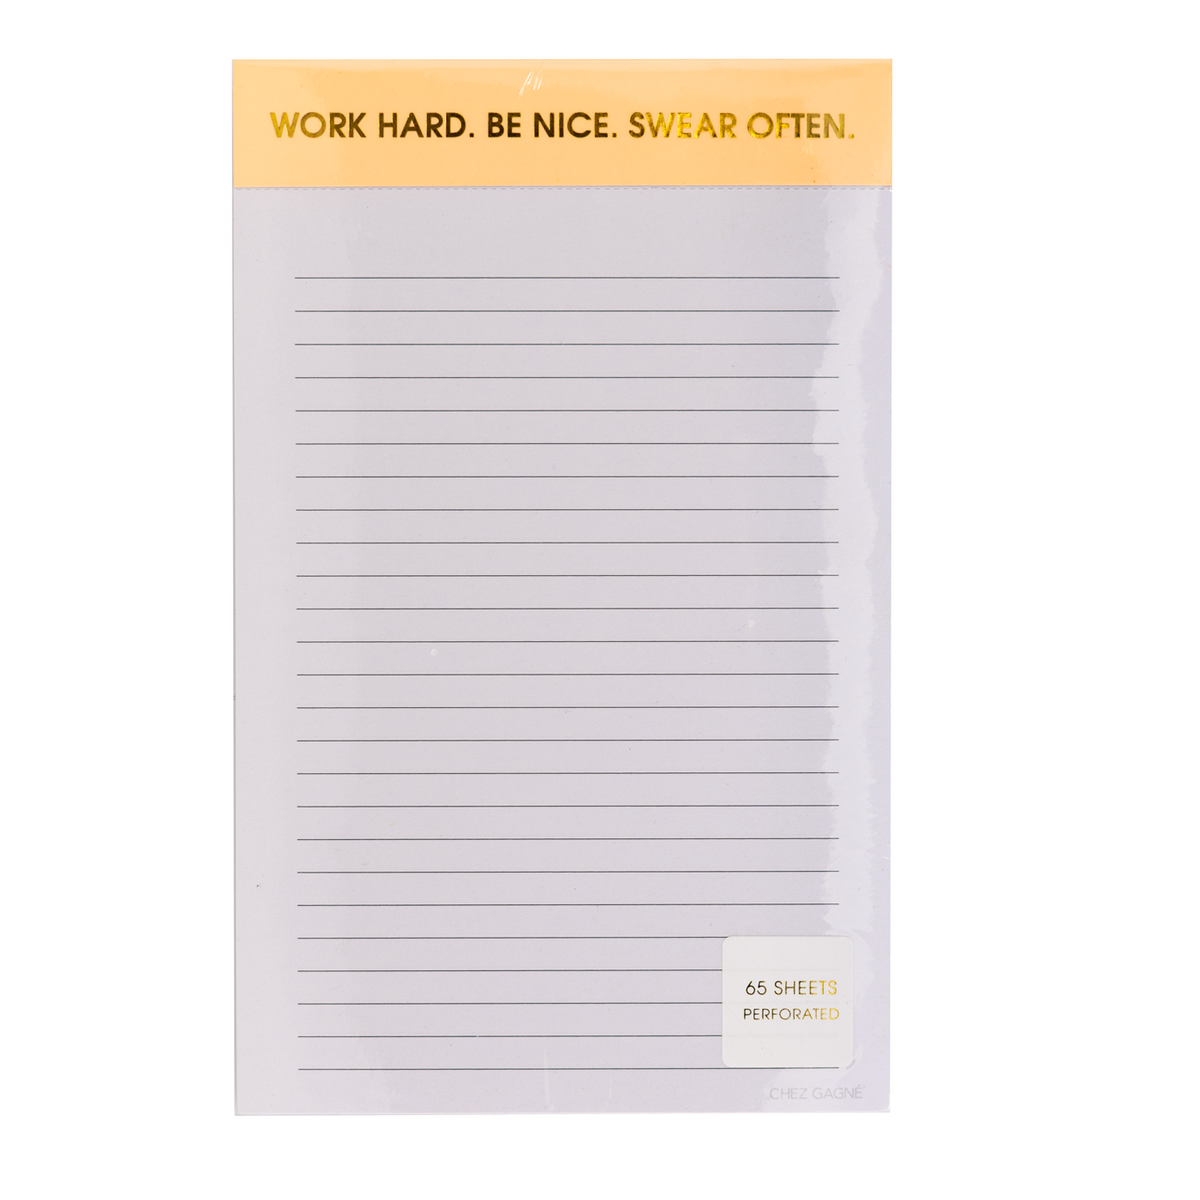 CHEZ GAGNE - Notepad - Work Hard, Be Nice, Swear Often